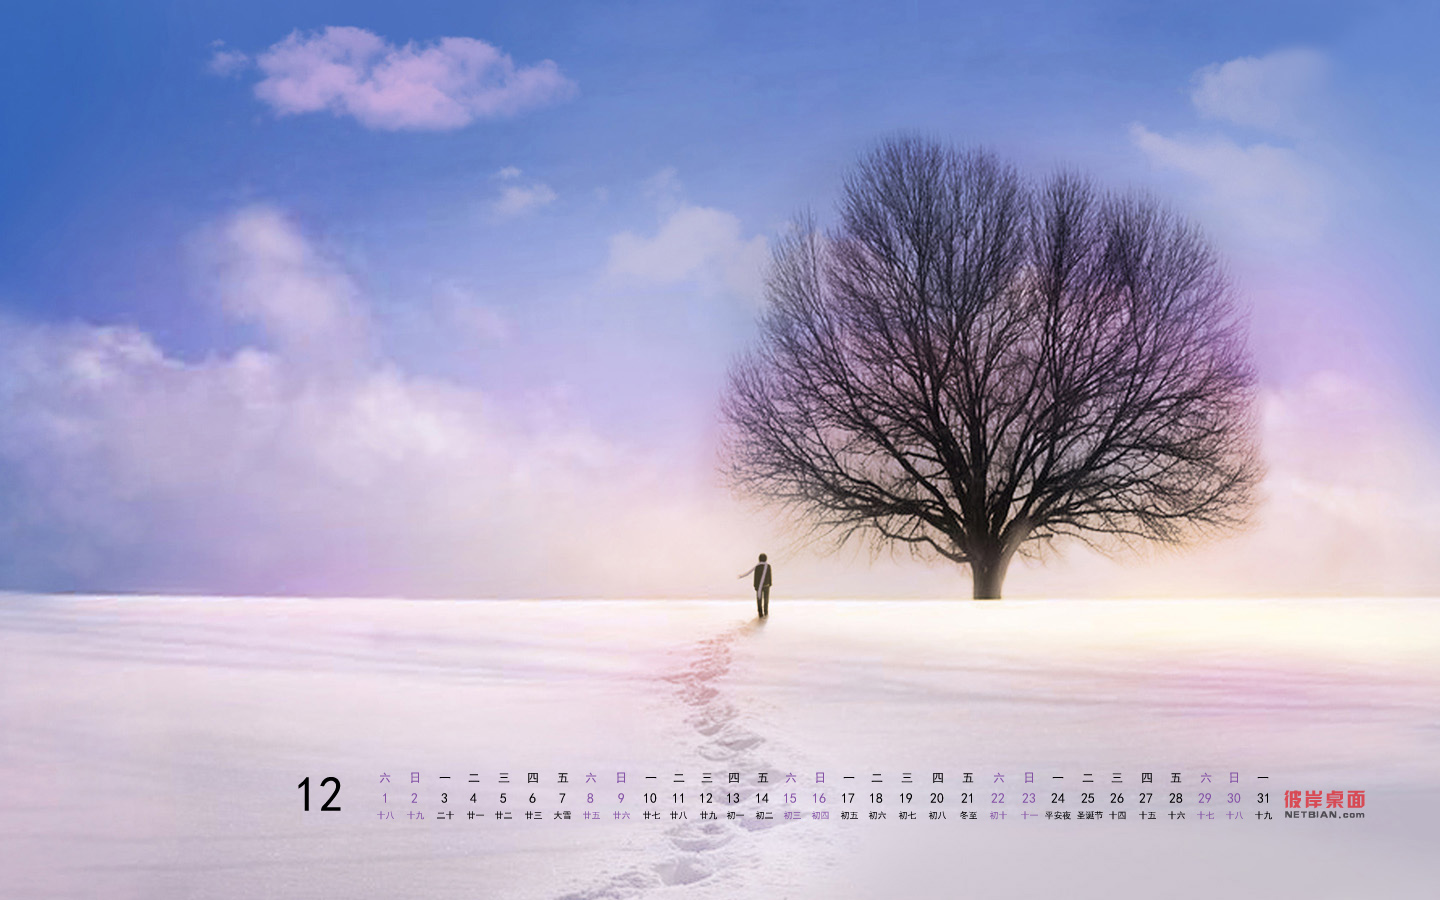 There is a tree in the sky 2012 December calendar desktop wallpaper 2012 annual calendar wallpaper